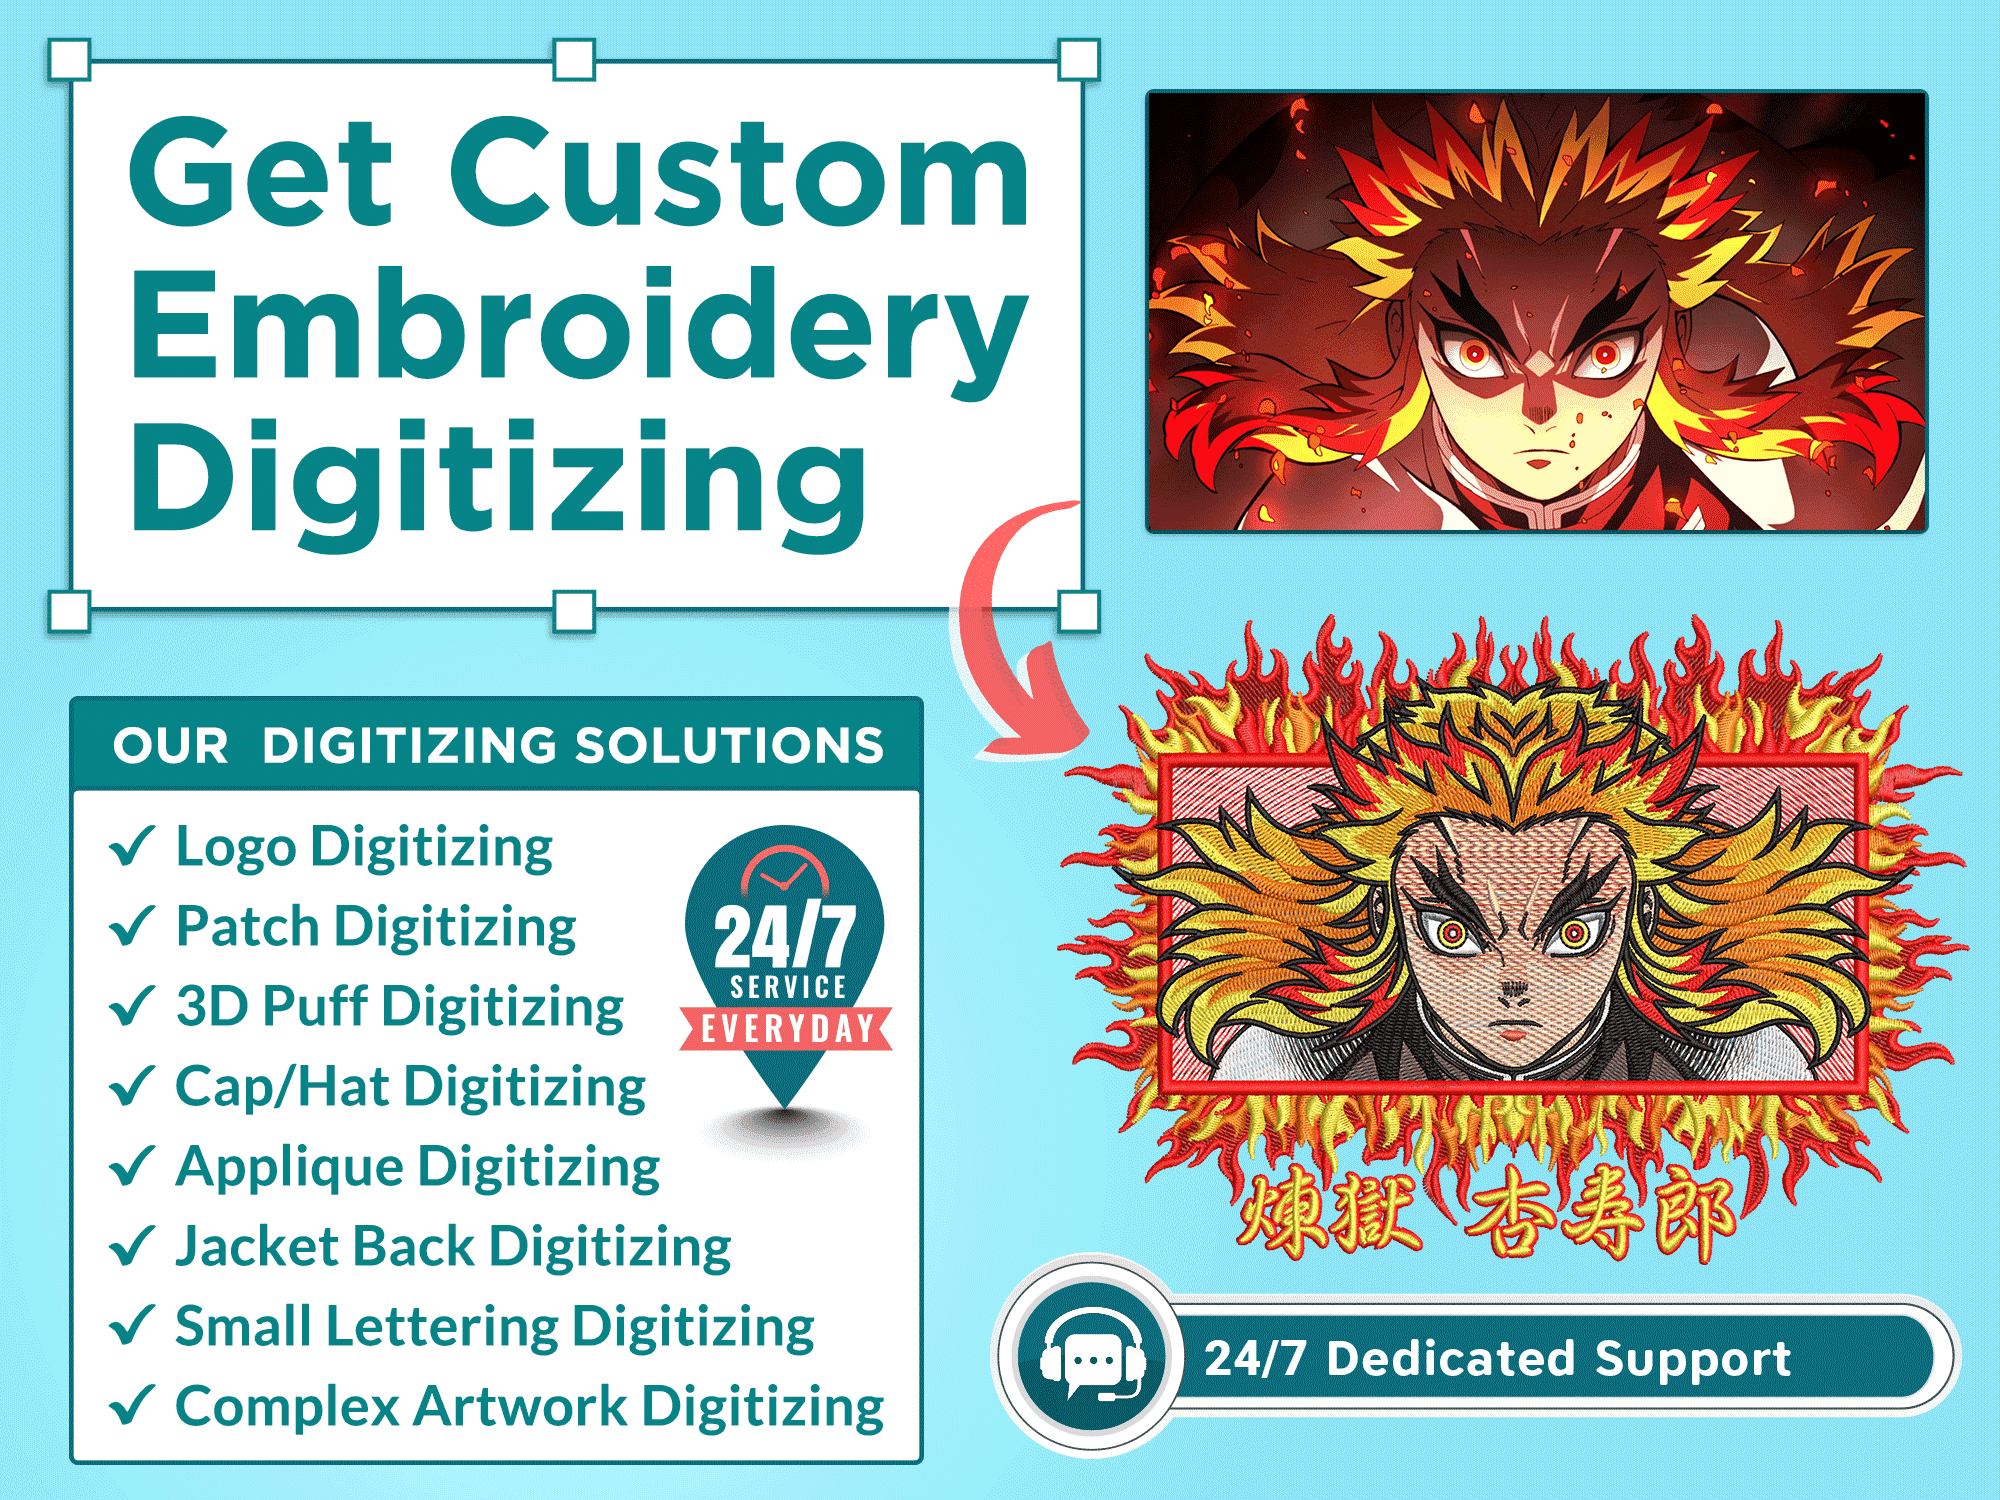 Custom Embroidery Digitizing Service